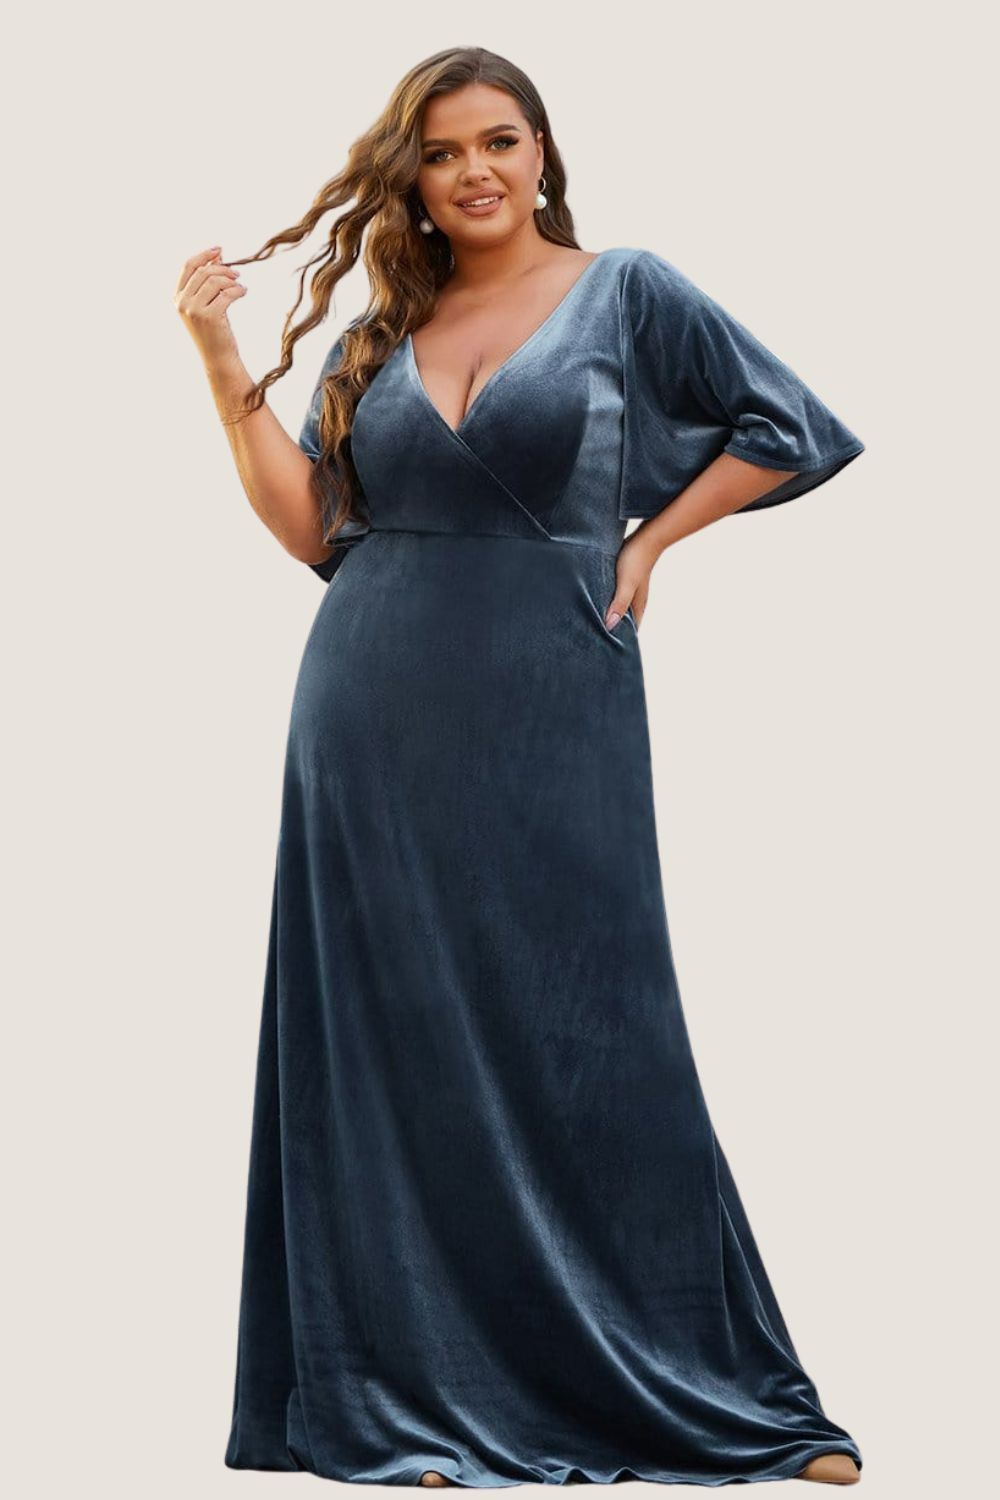 Layla Dusty Blue Velvet Bridesmaid Dress by Dressology